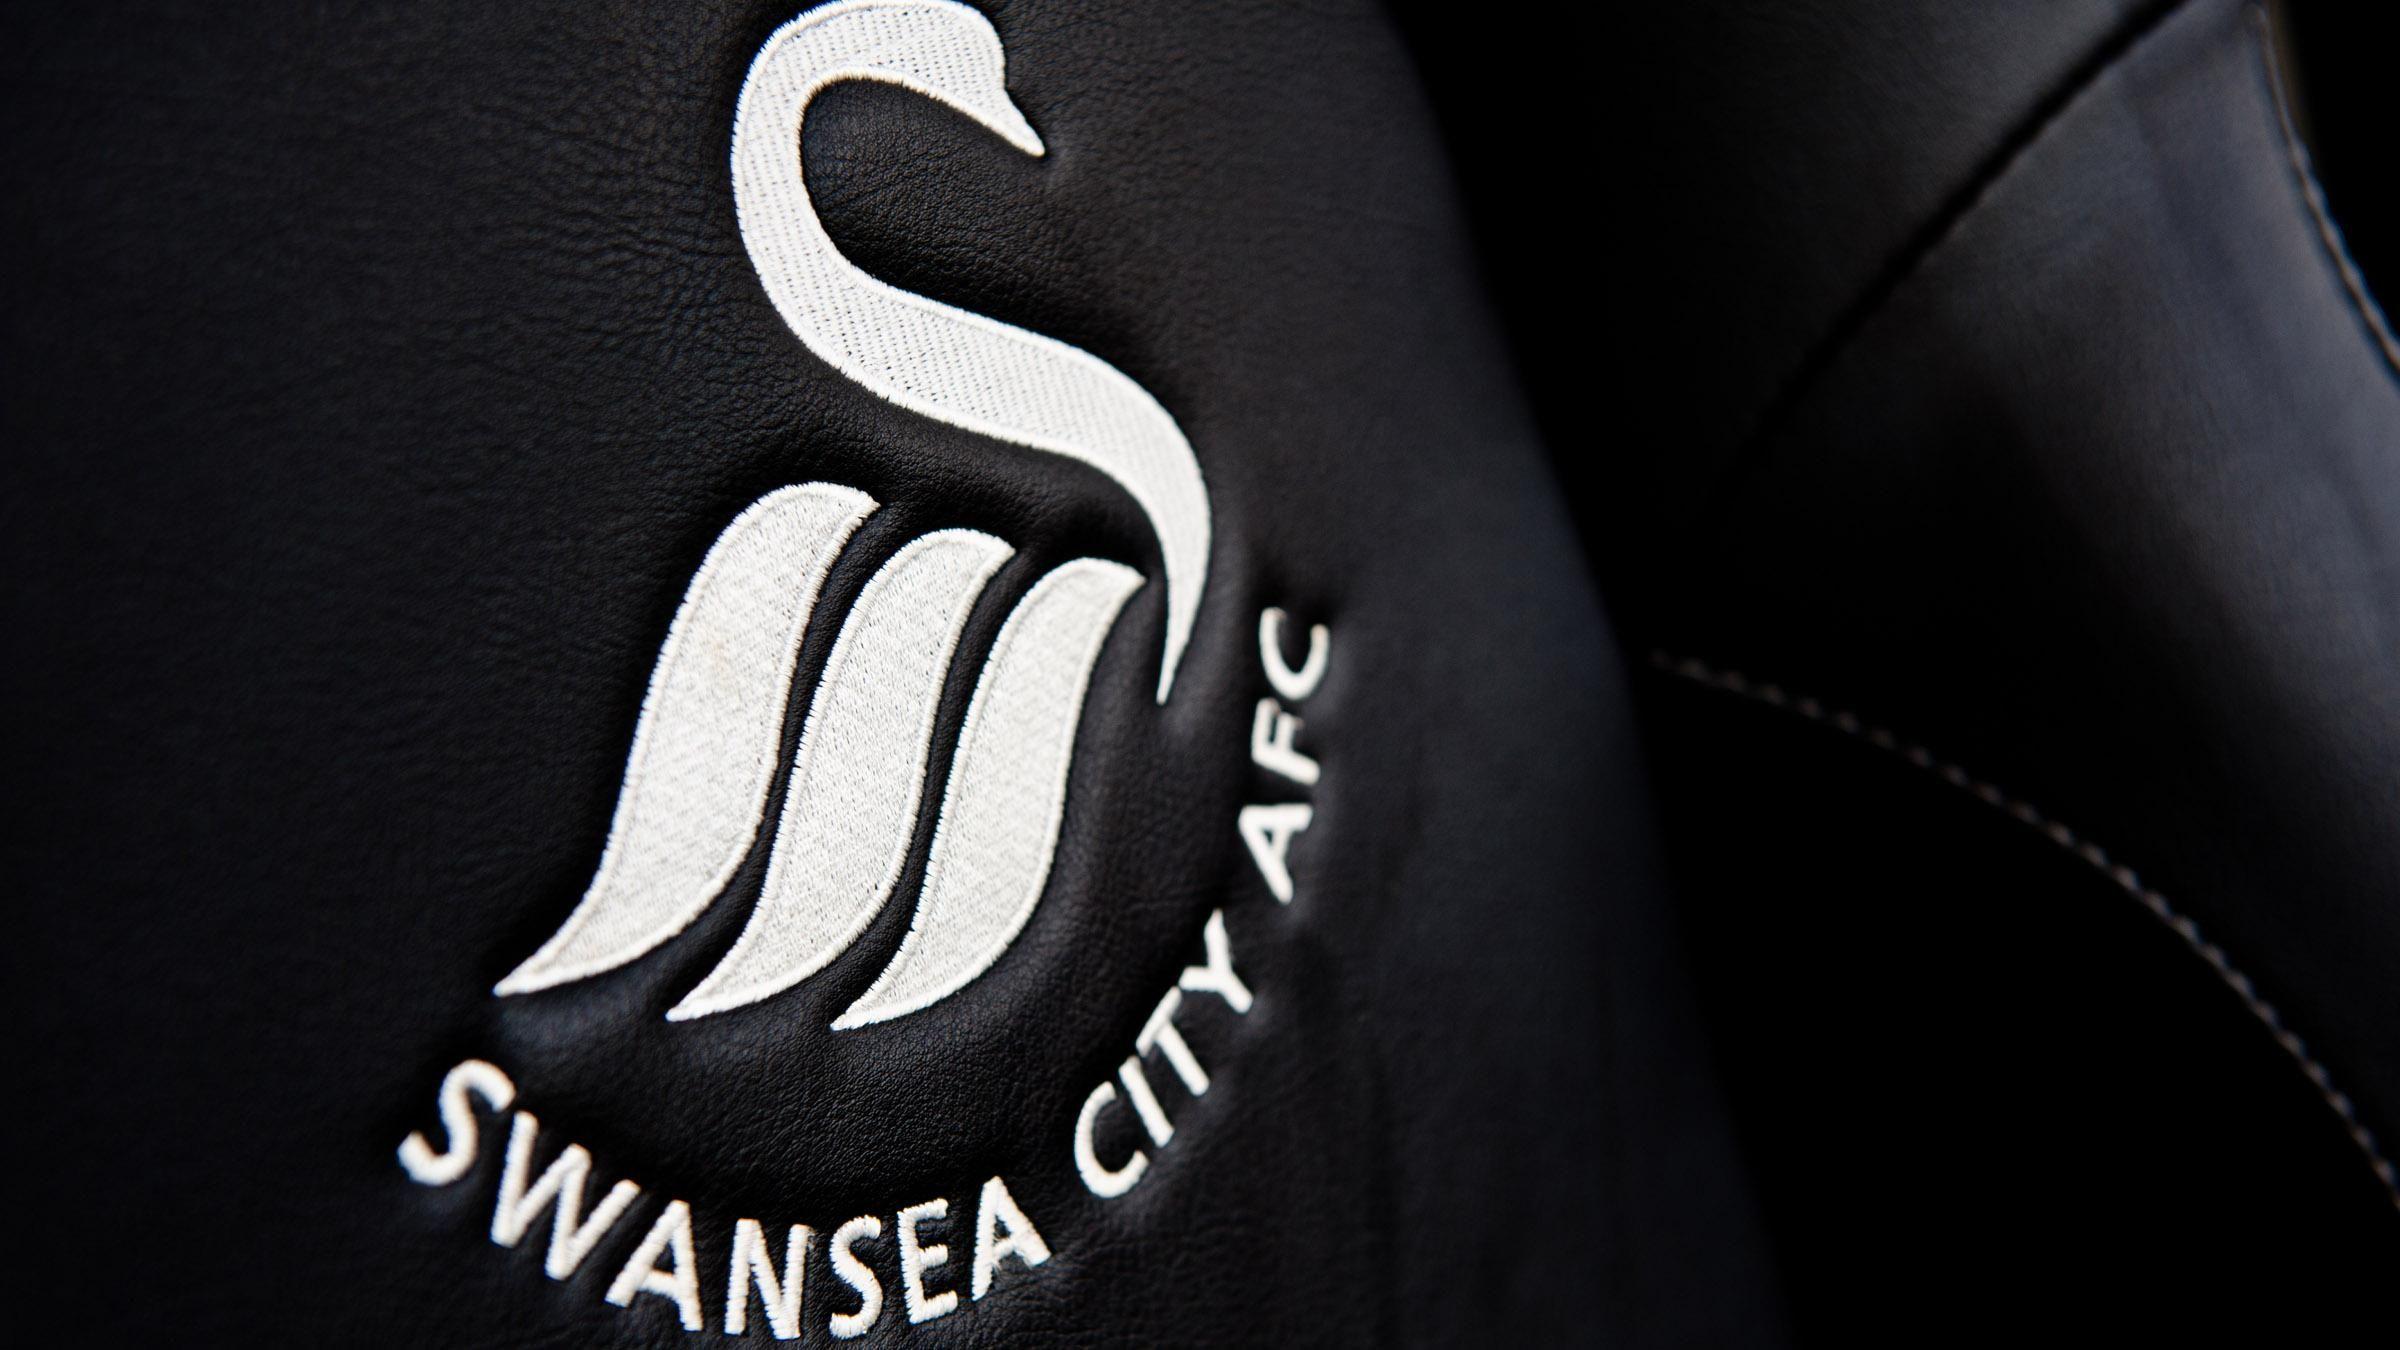 Swansea City Logo - Brand Protection | Swansea City FC